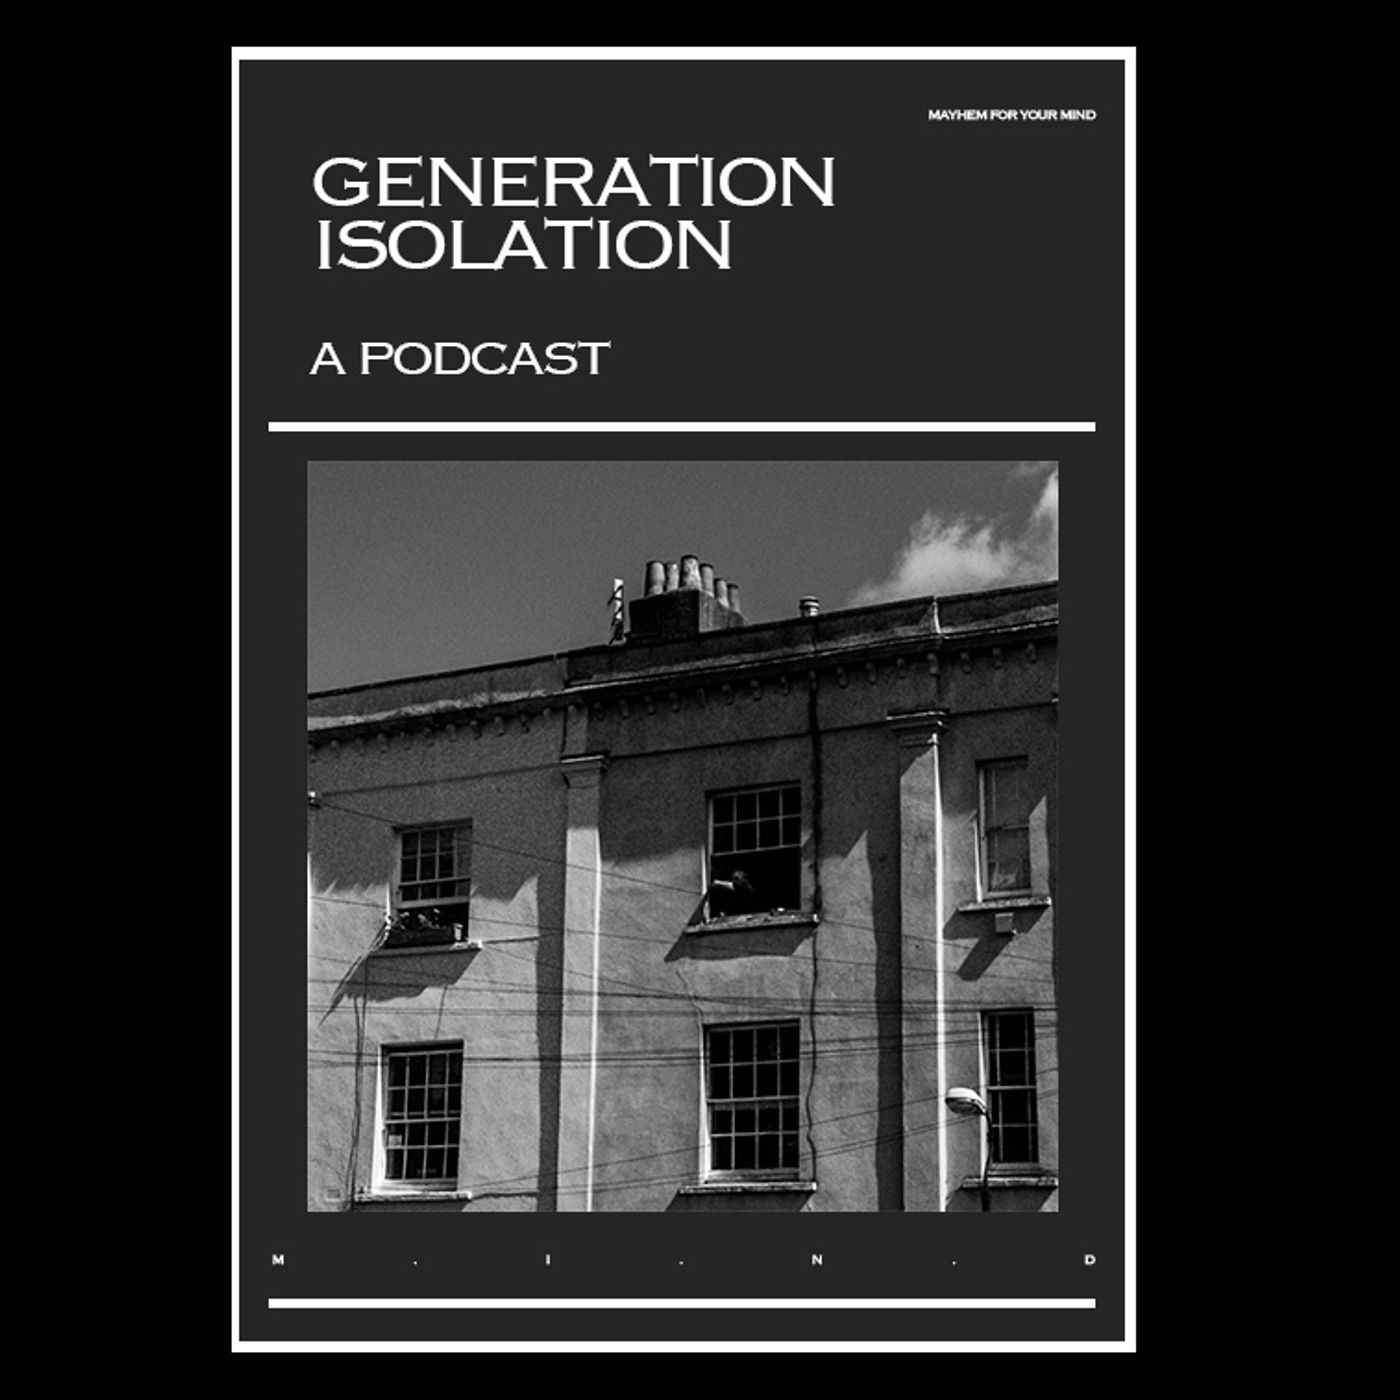 Generation Isolation - Kieran Birch